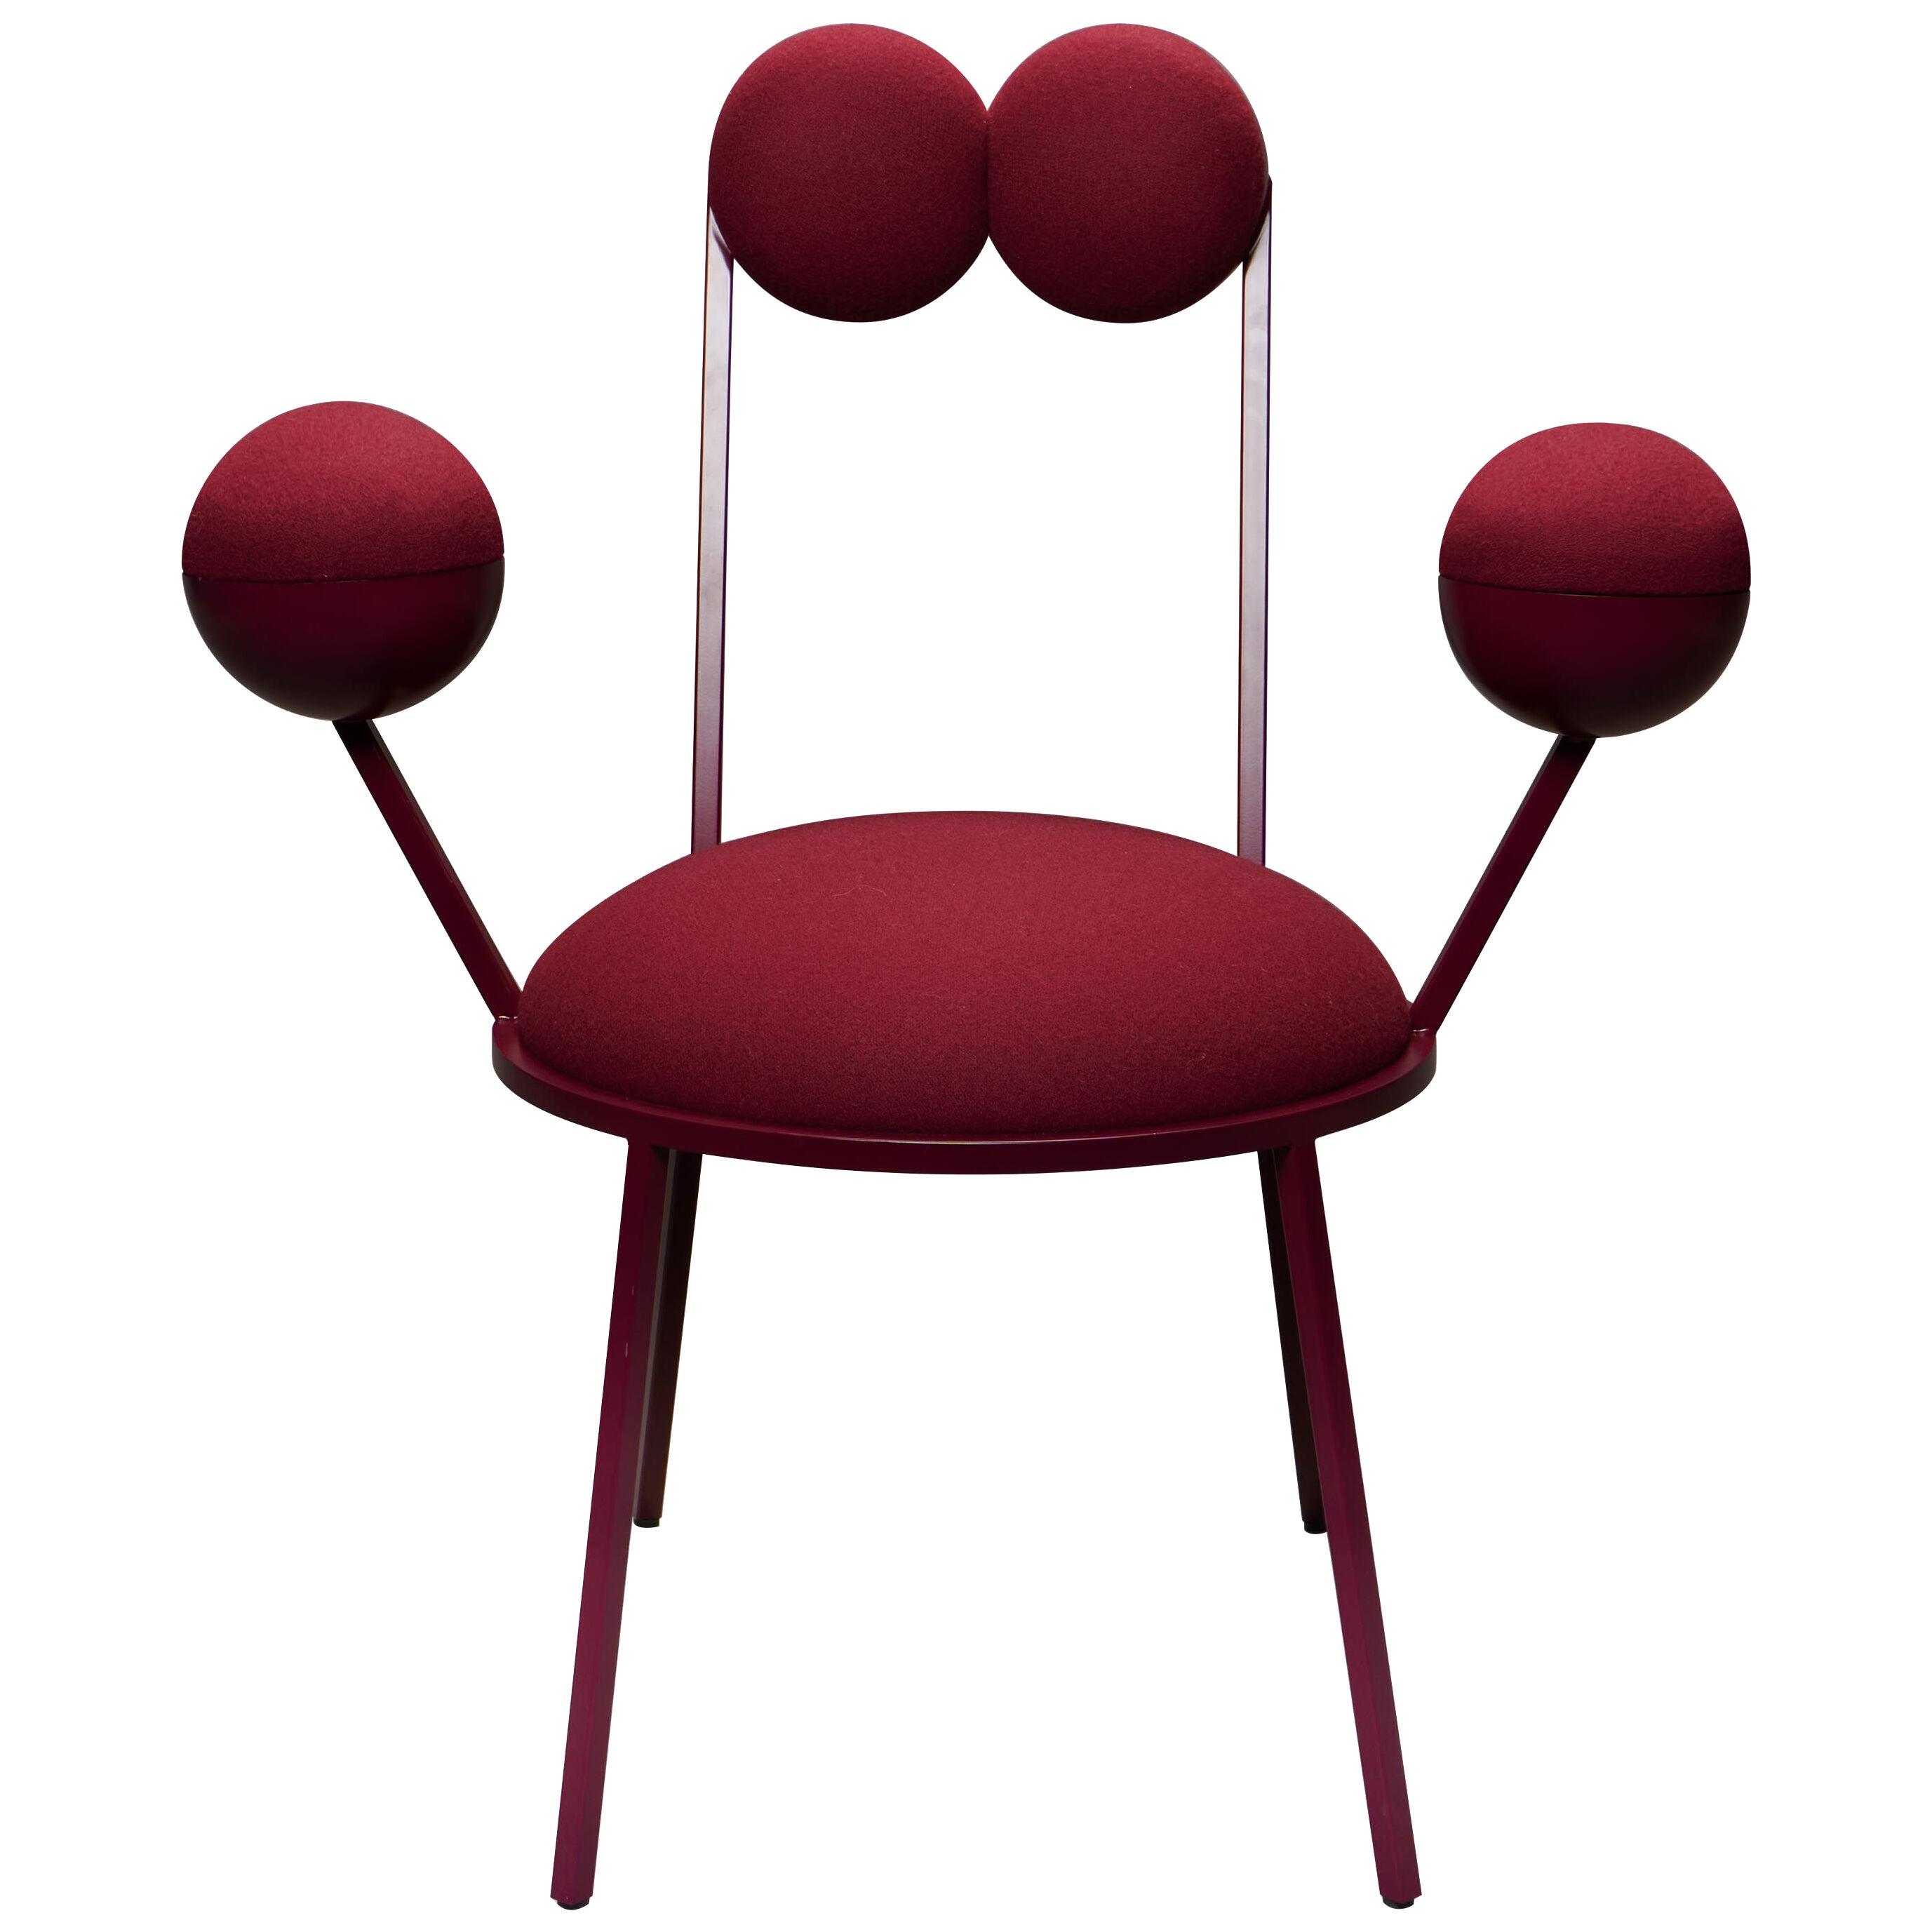 Lara Bohinc, "Trevor Dining Chair with Armrests", 2021